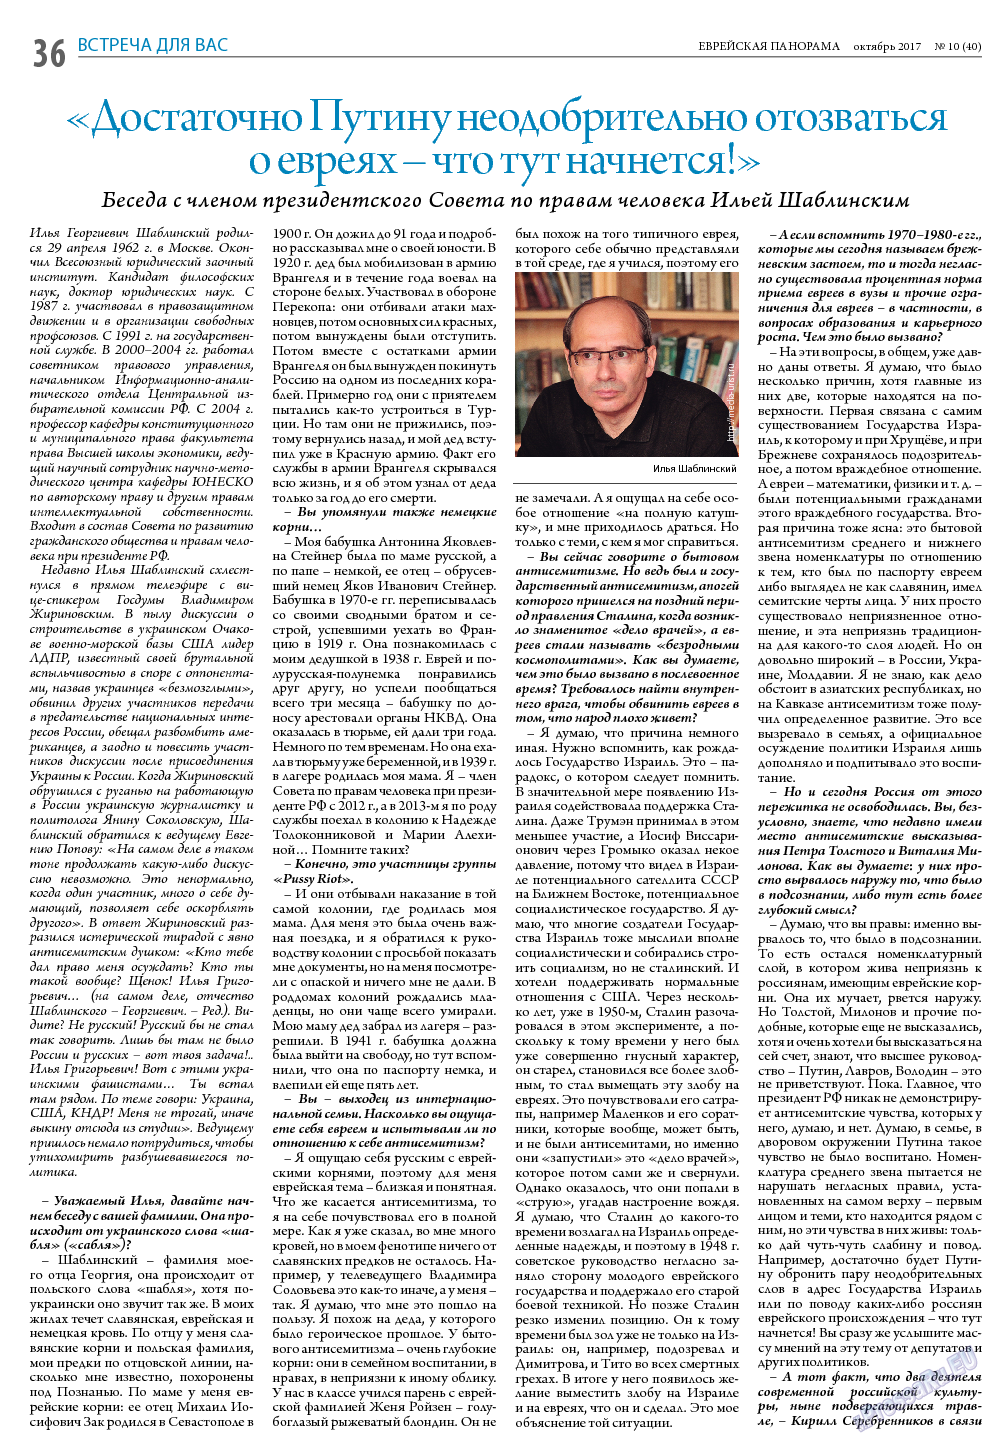 Еврейская панорама, газета. 2017 №10 стр.36